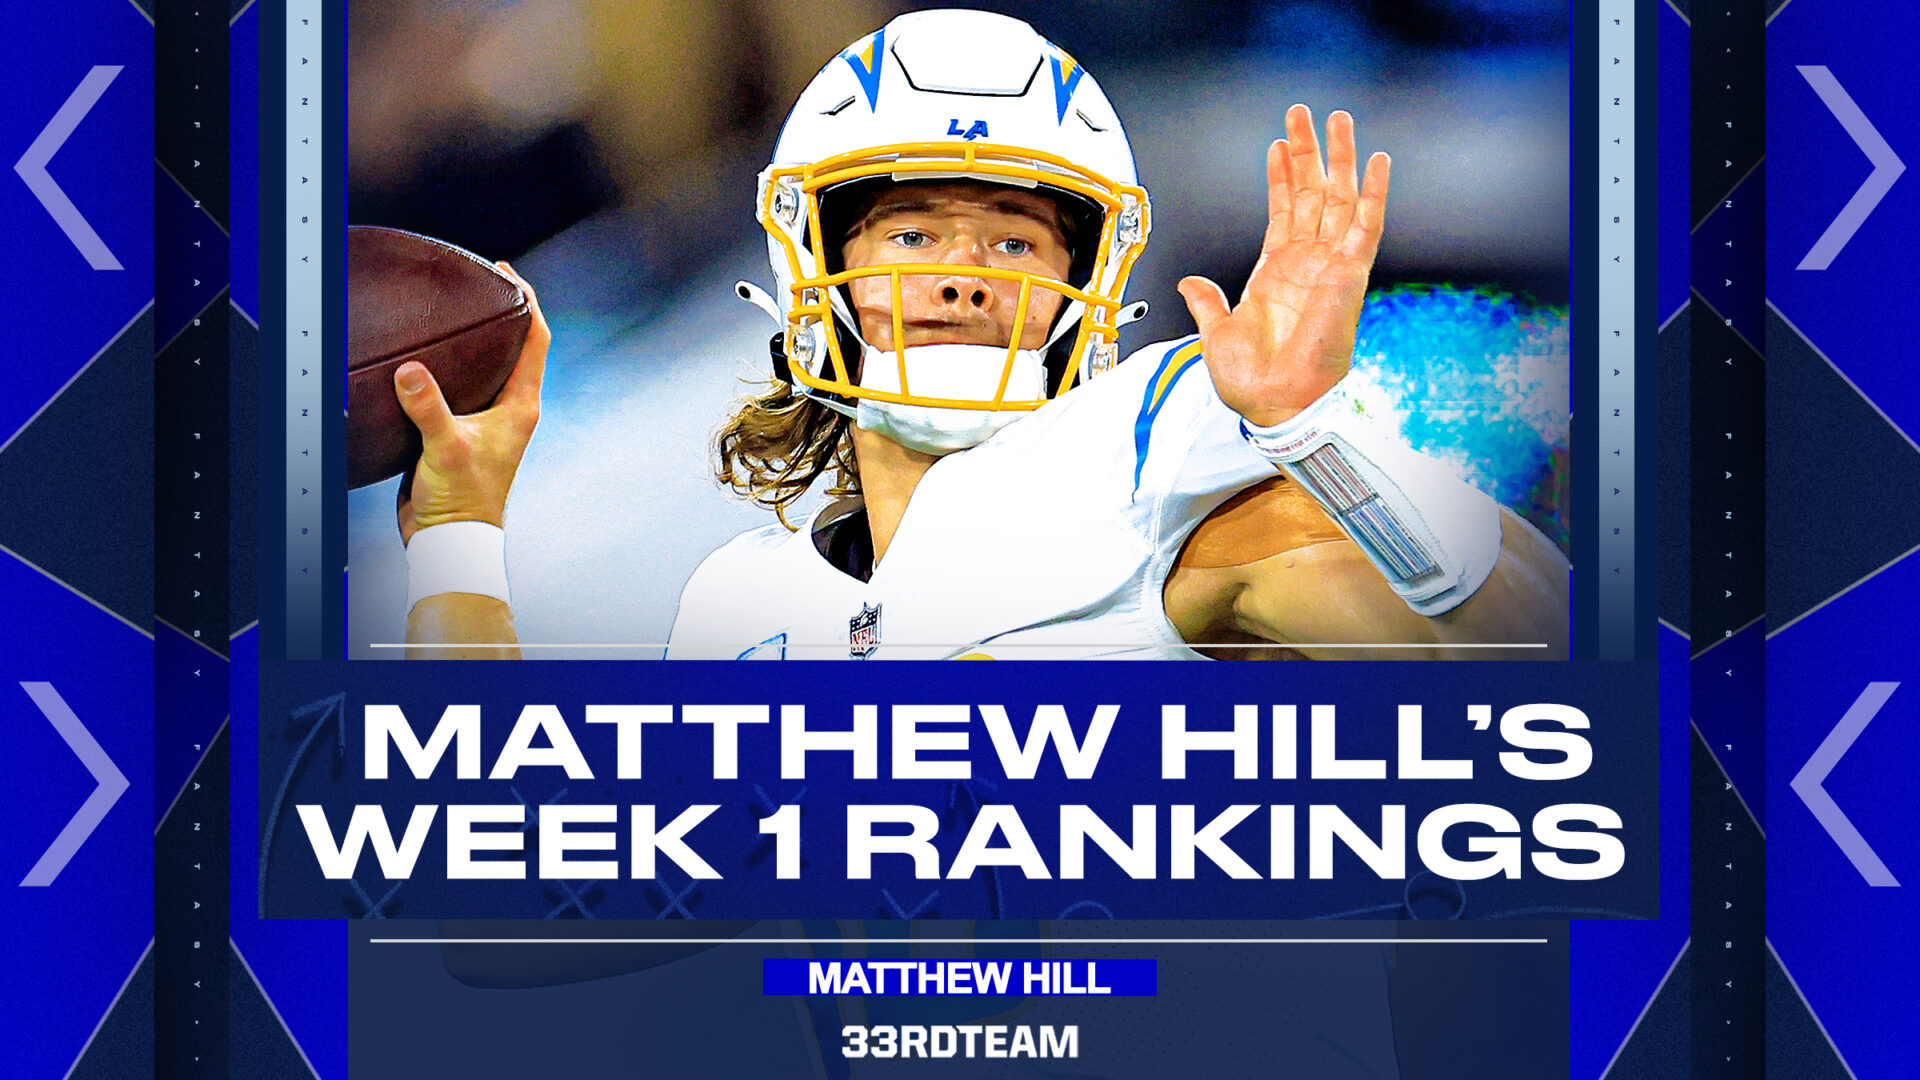 Justin Herbert with text "Matthew Hill's Week 1 Rankings"